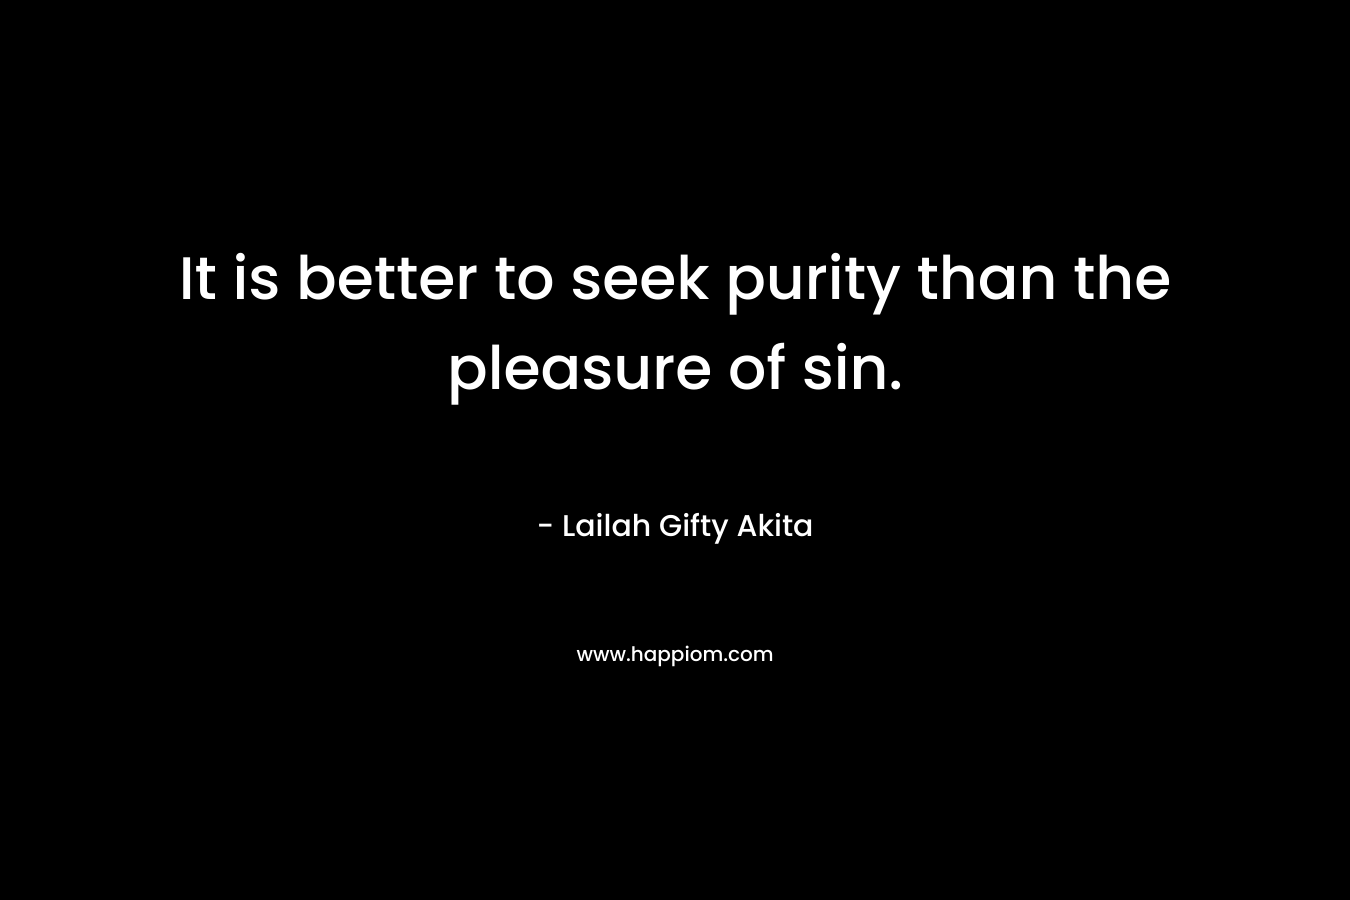 It is better to seek purity than the pleasure of sin.